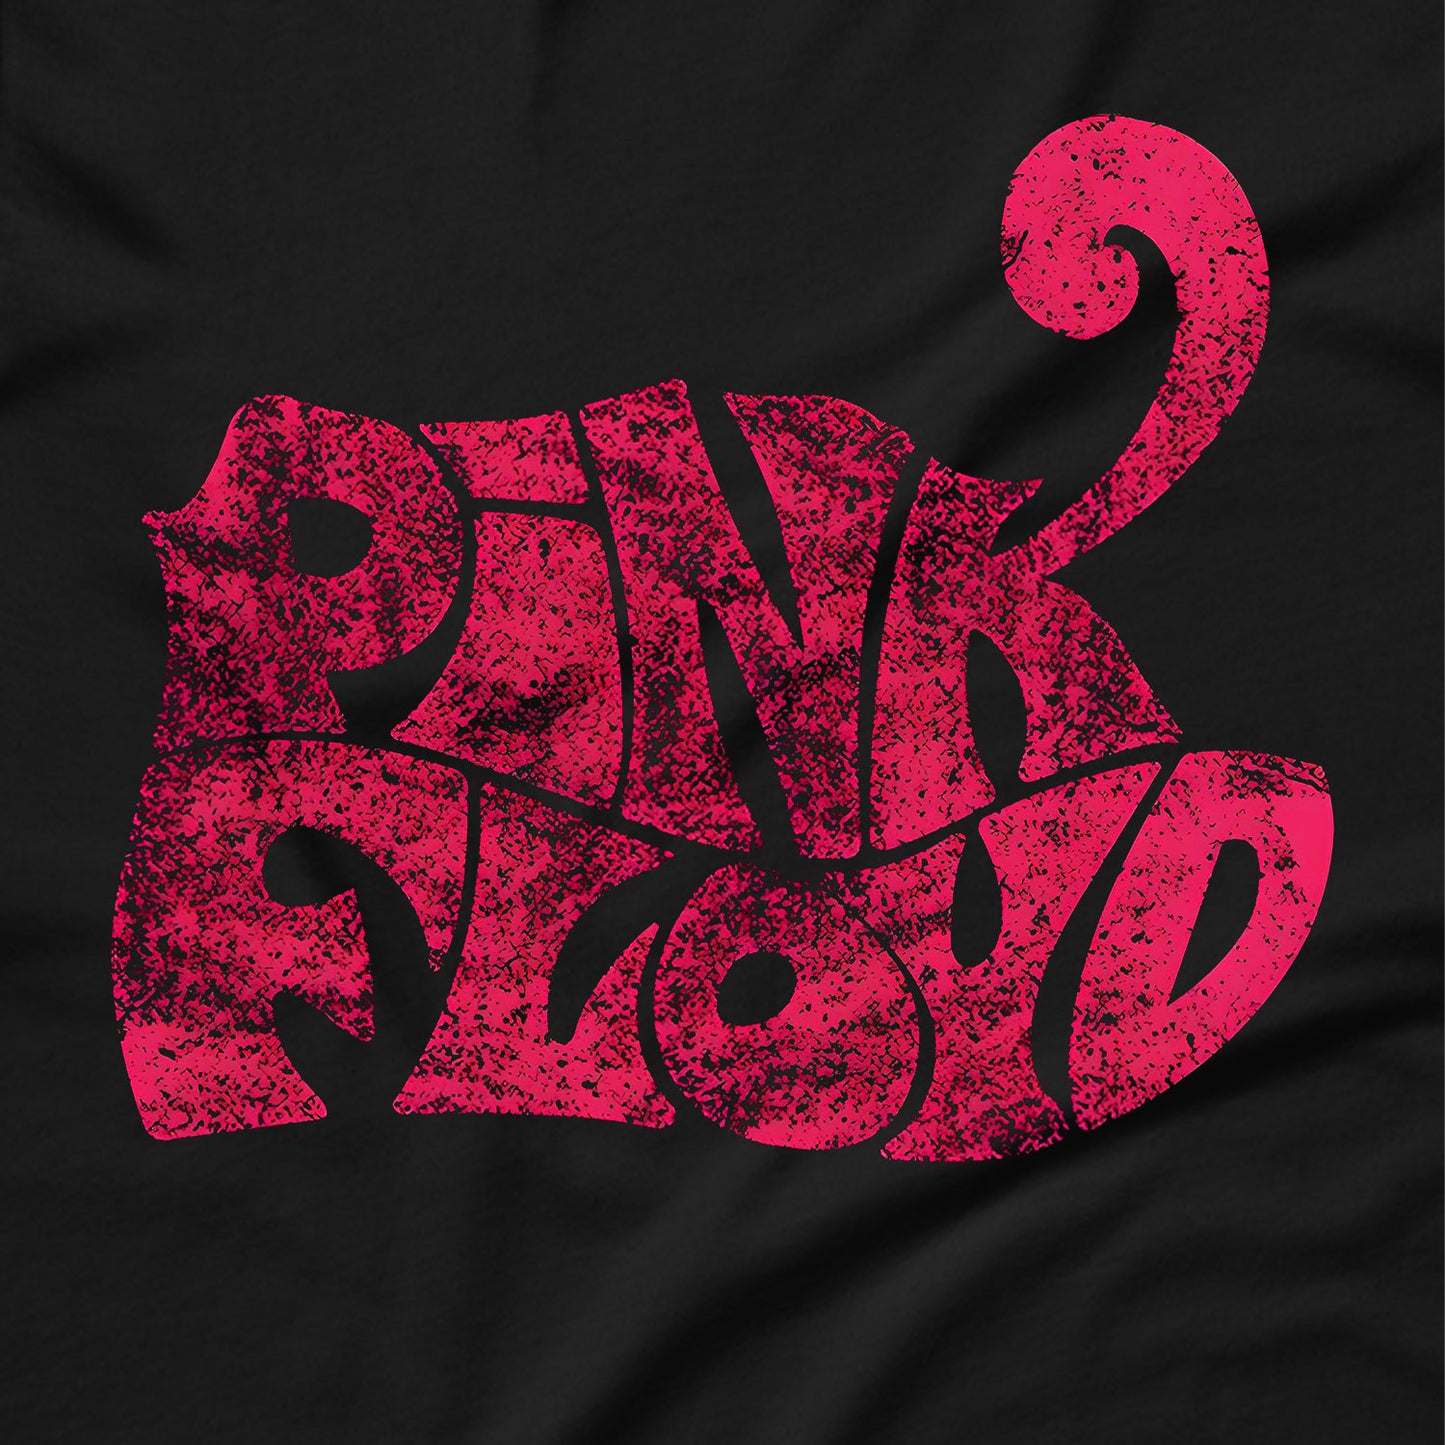 Pink Floyd - Swirl Logo T-Shirt